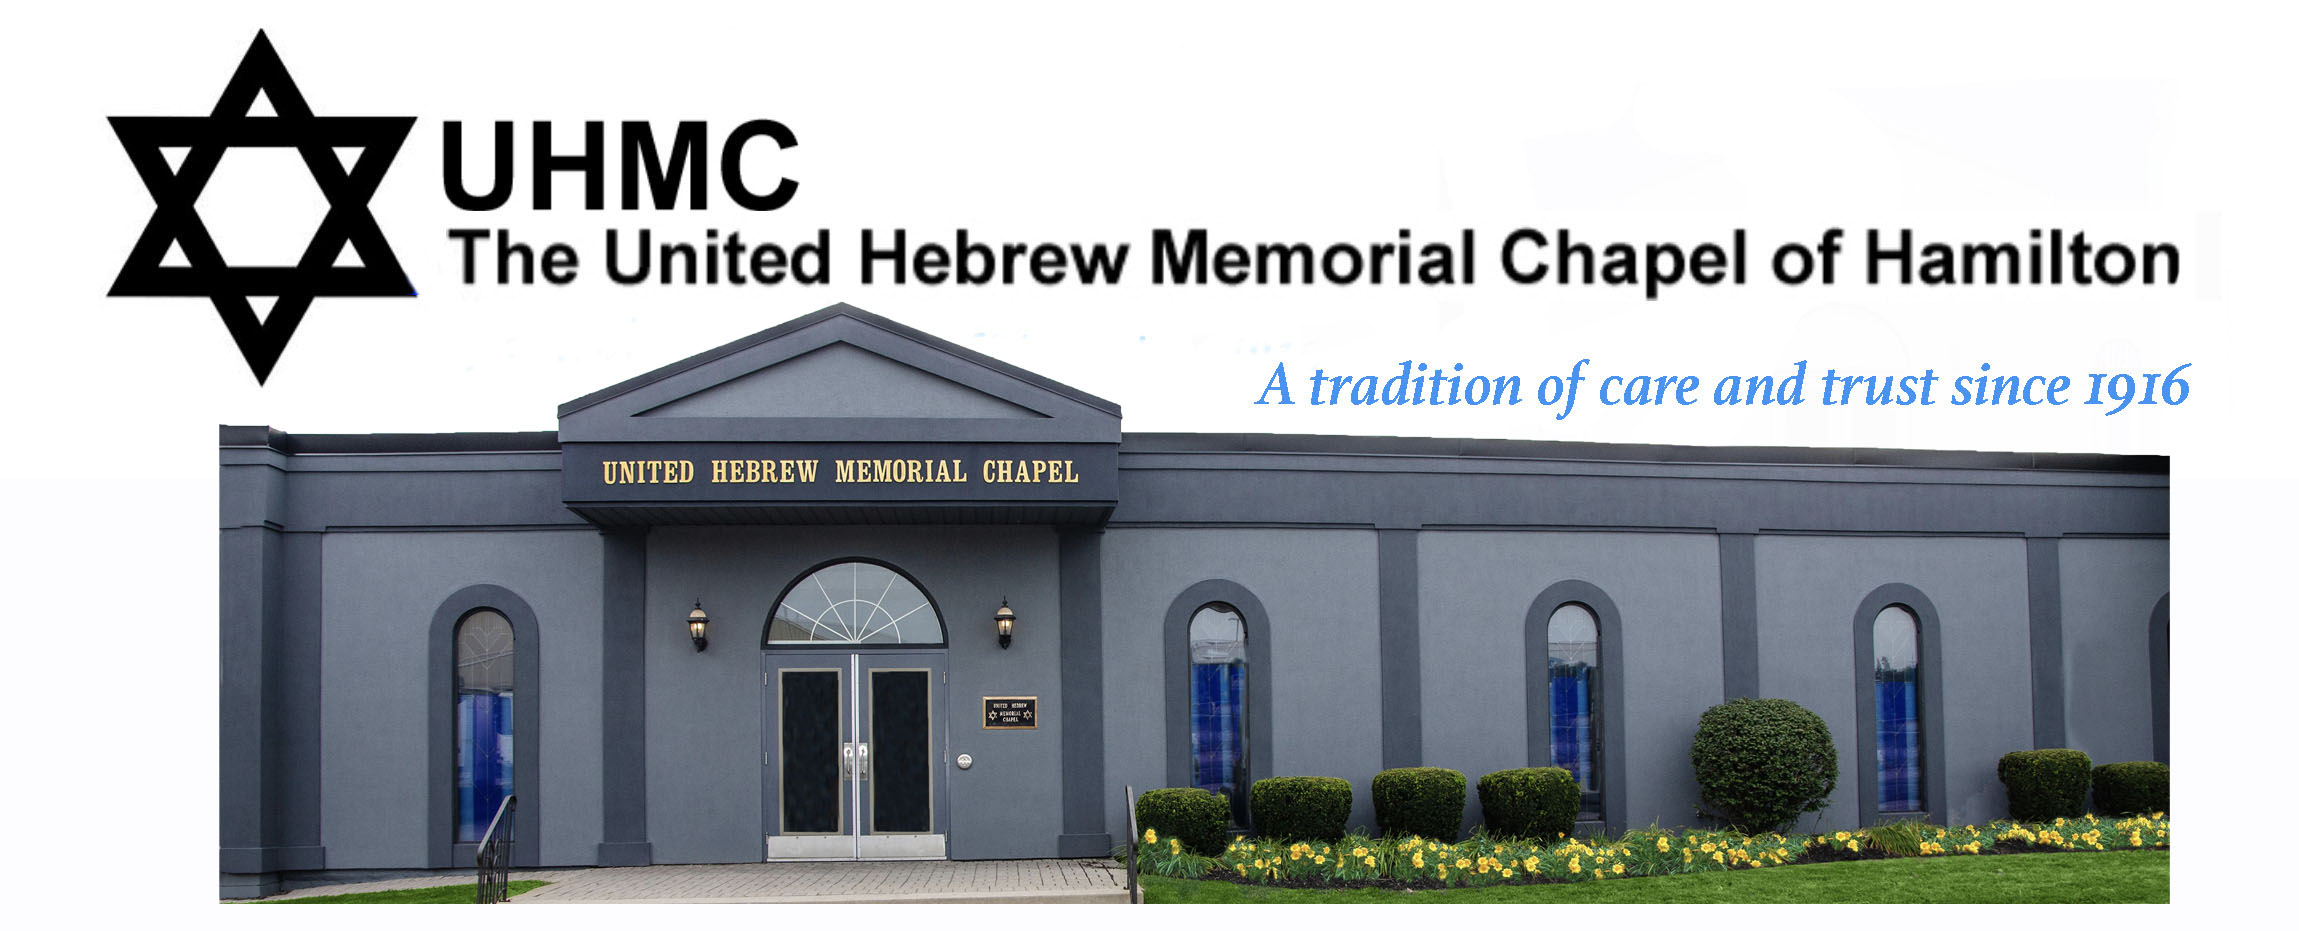 United Hebrew Memorial Chapel of Hamilton